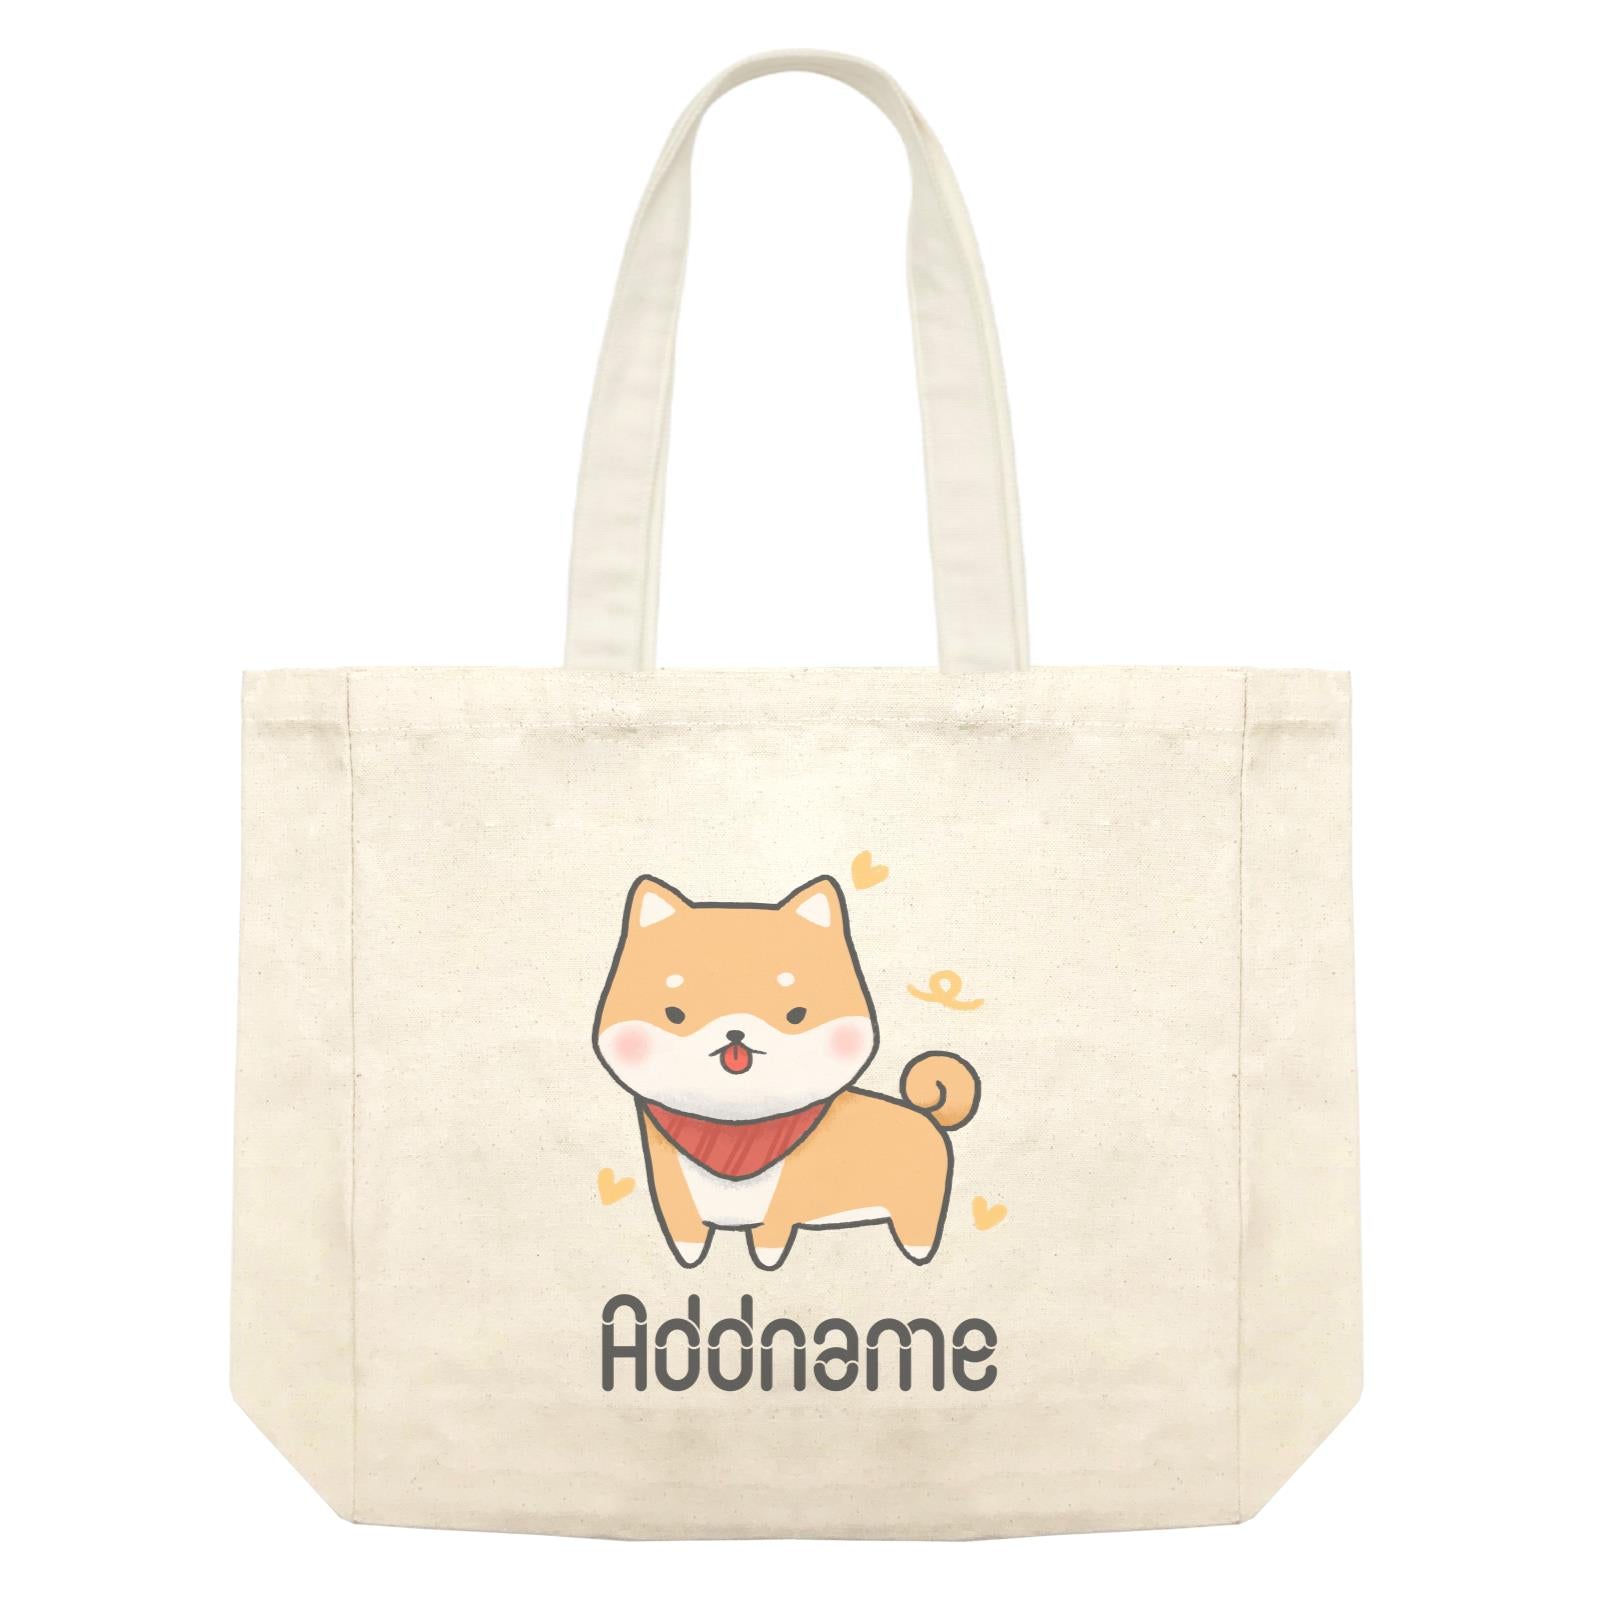 Cute Hand Drawn Style Shiba Inu Addname Shopping Bag